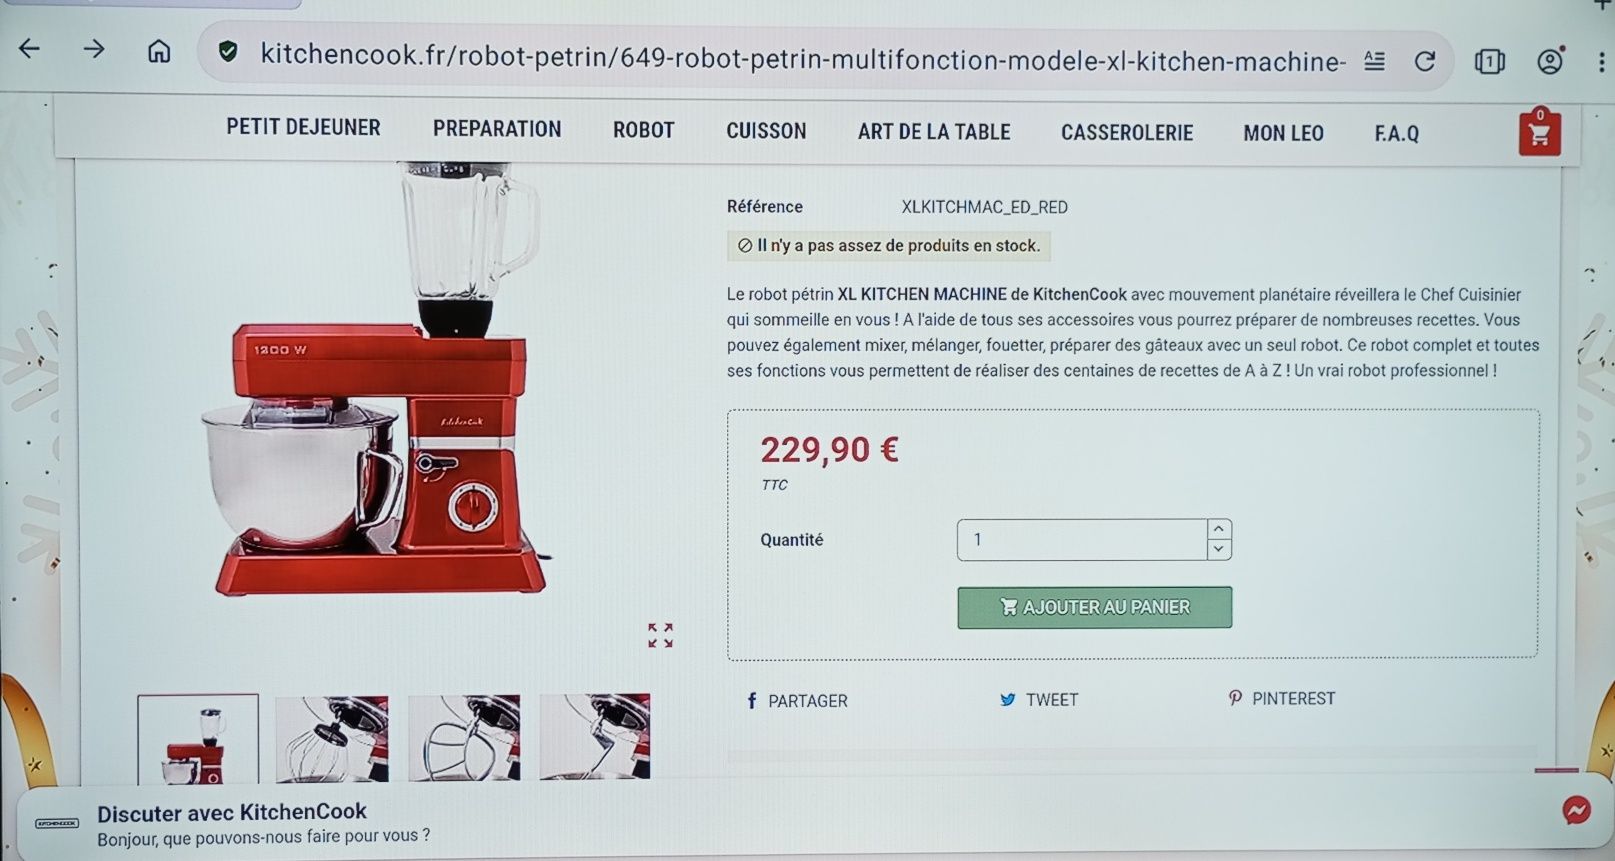 Francuski robot kuchenny/planetarny KitchenCoock 1200 W wersja limit.